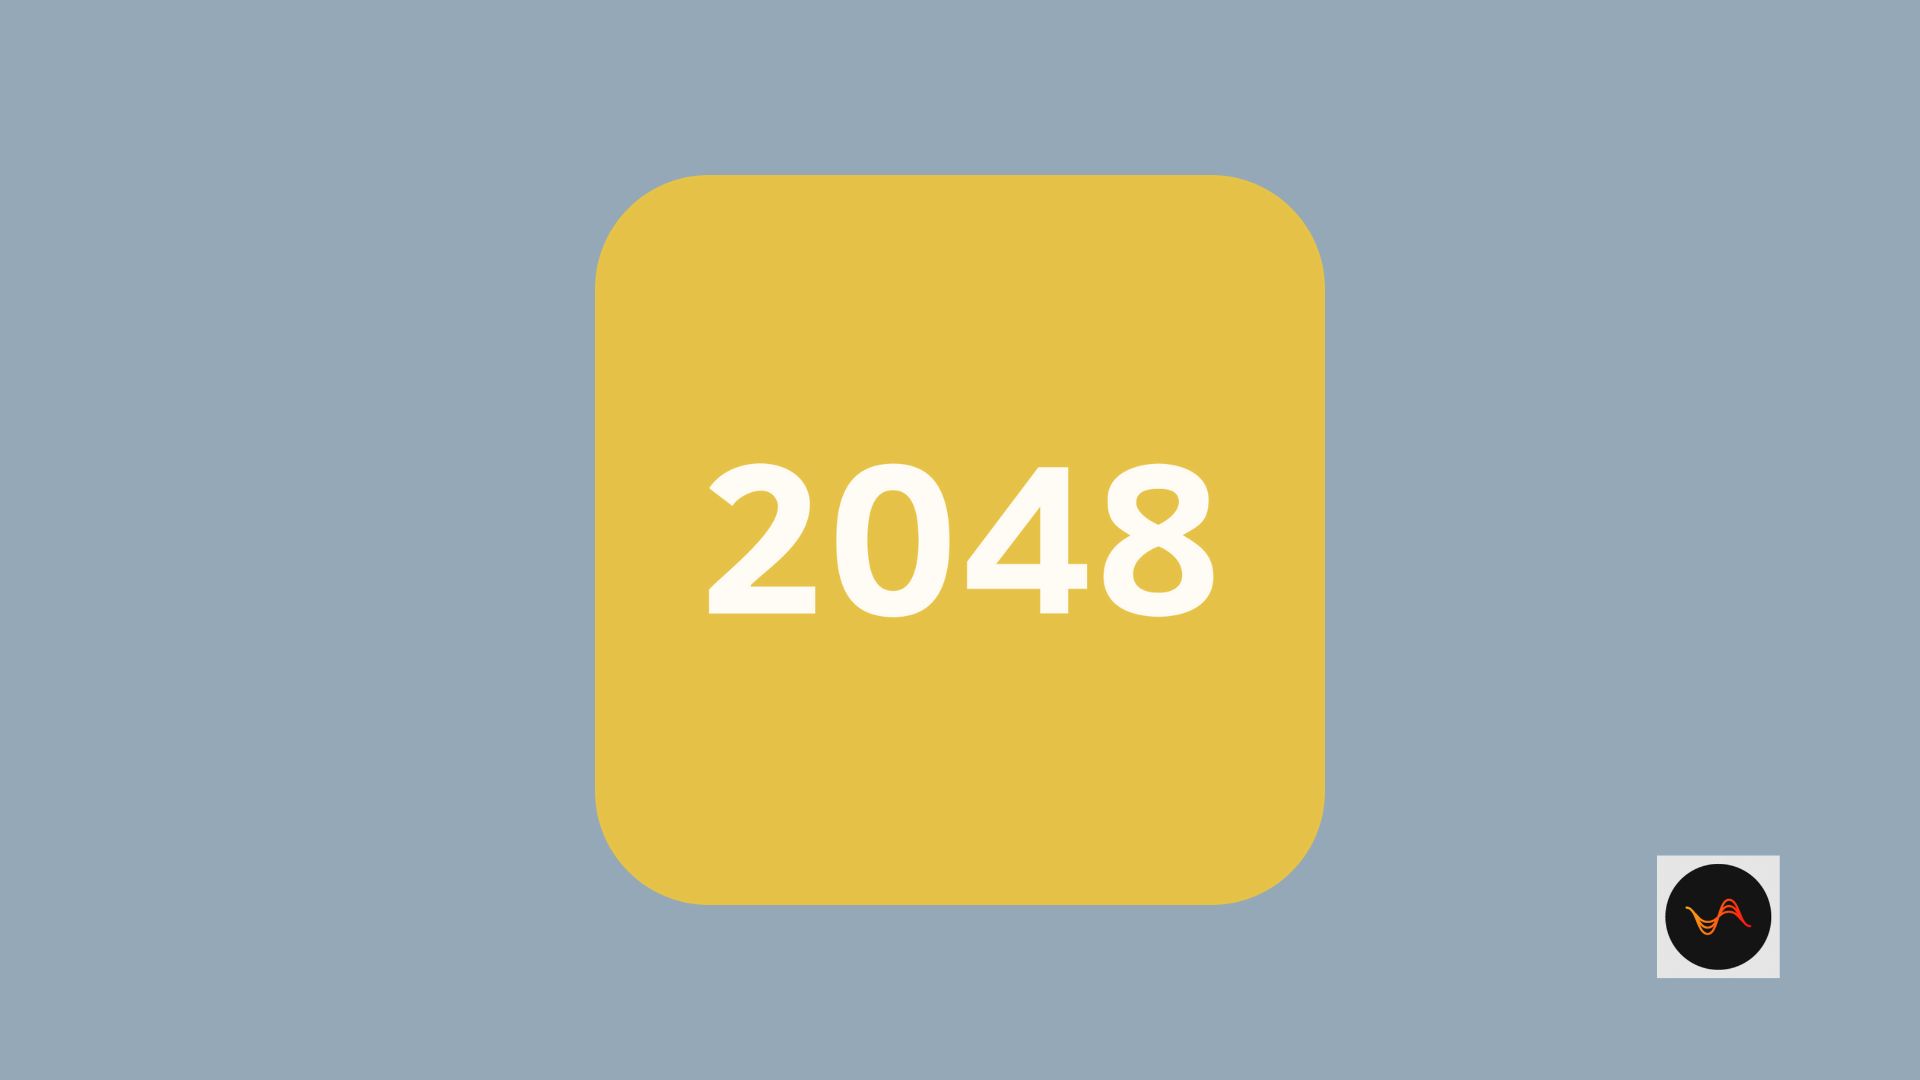 games like 2048 online games like 2048